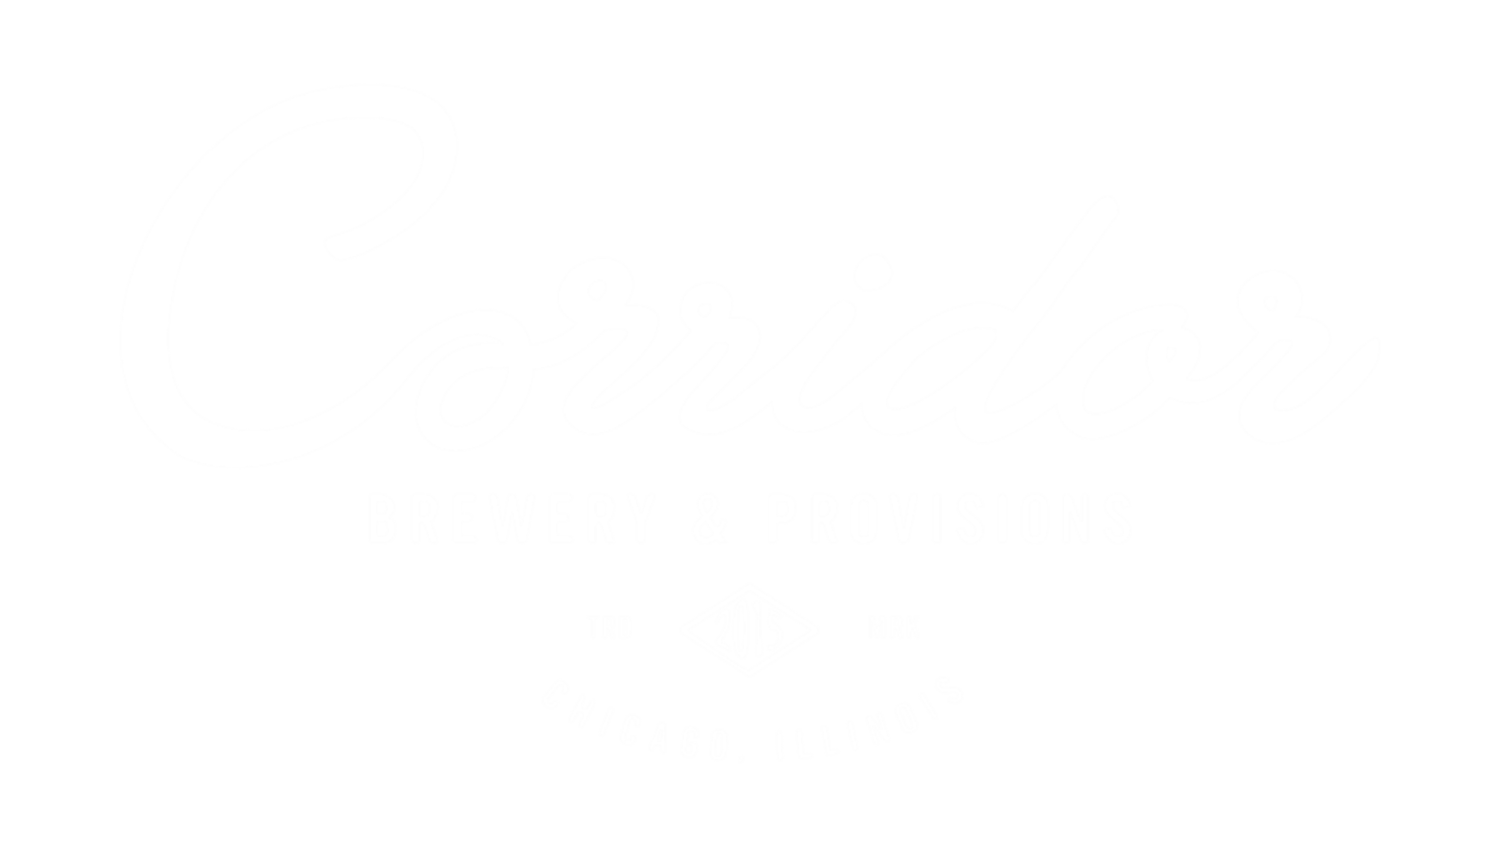 Corridor Brewery & Provisions | Chicago, Ill.